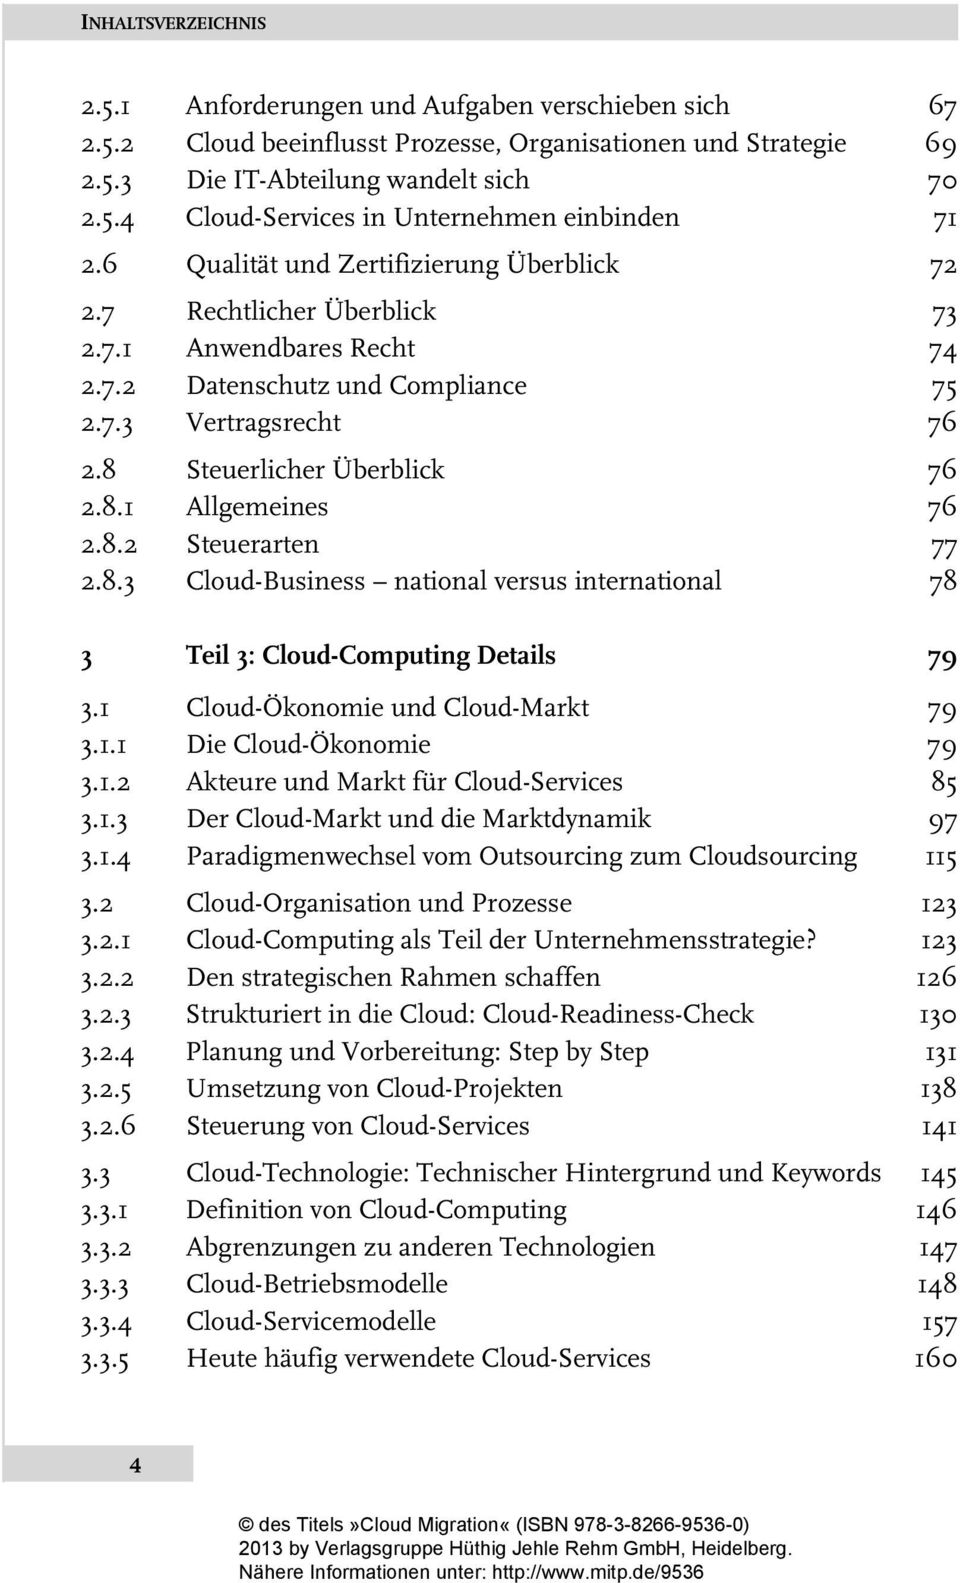 8.2 Steuerarten 77 2.8.3 Cloud-Business national versus international 78 3 Teil 3: Cloud-Computing Details 79 3.1 Cloud-Ökonomie und Cloud-Markt 79 3.1.1 Die Cloud-Ökonomie 79 3.1.2 Akteure und Markt für Cloud-Services 85 3.